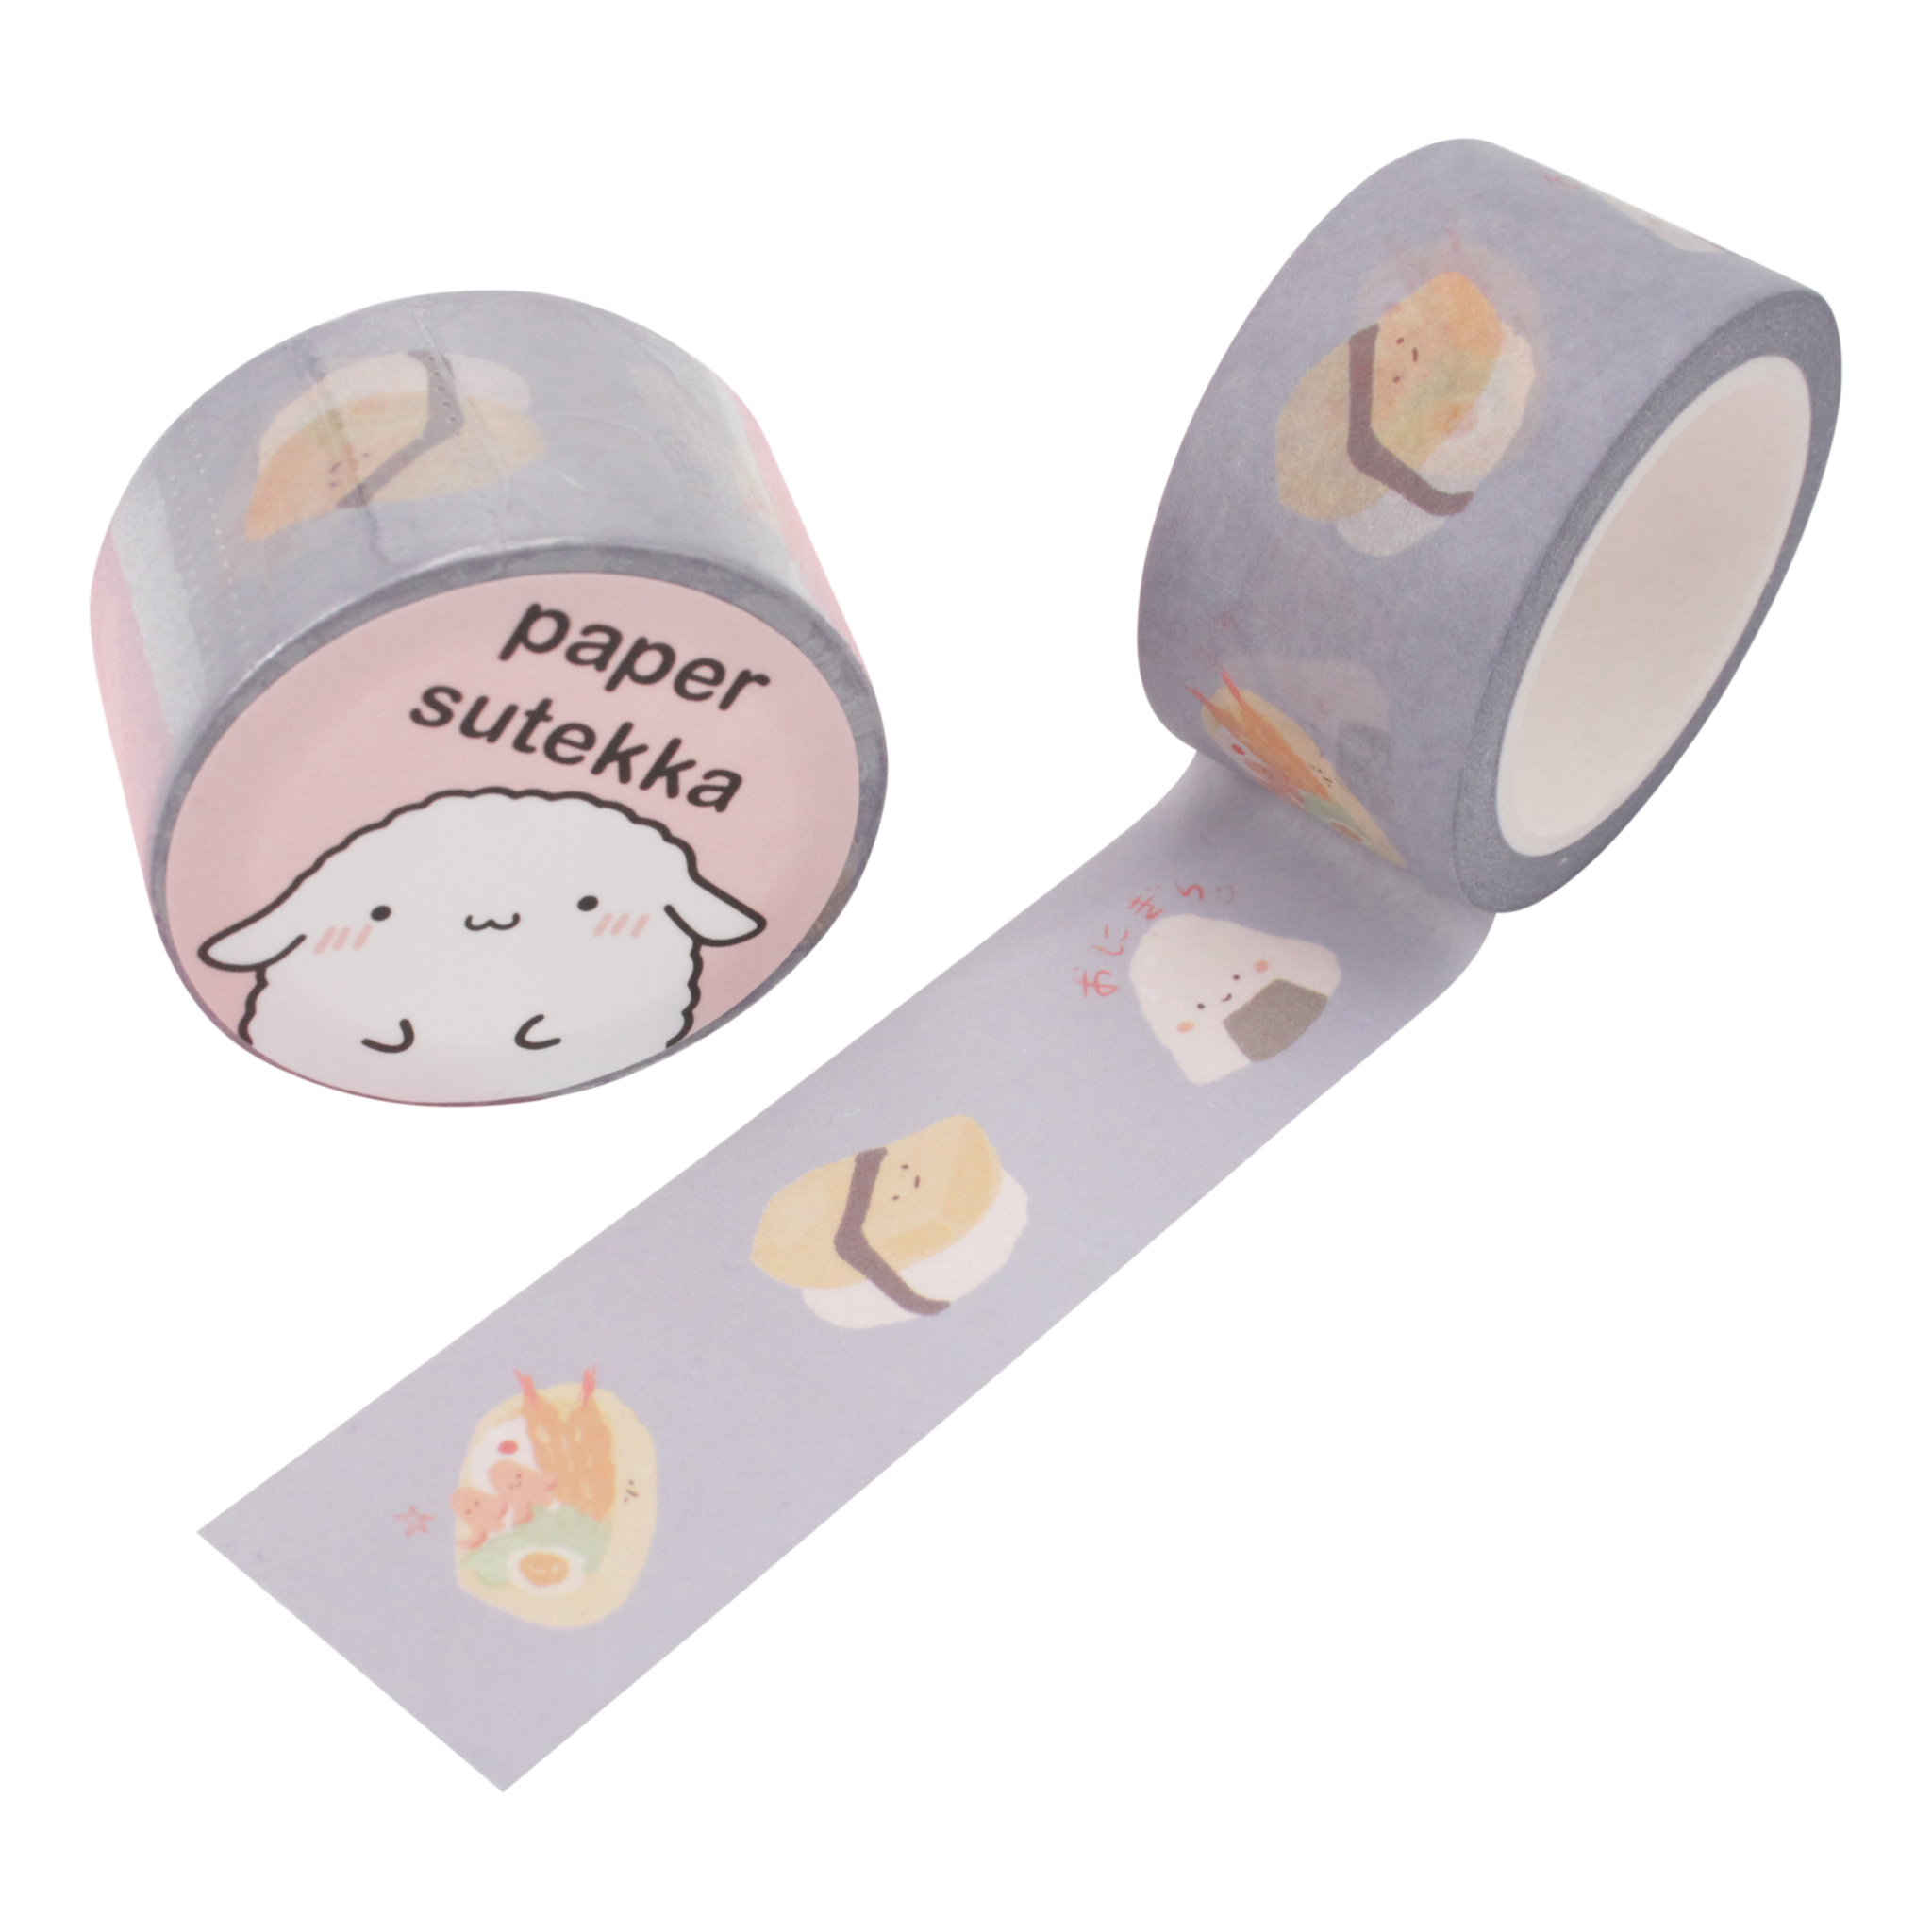 Paper Sutekka Washi Tape Onigiri Tamago Bento Box 25 mm